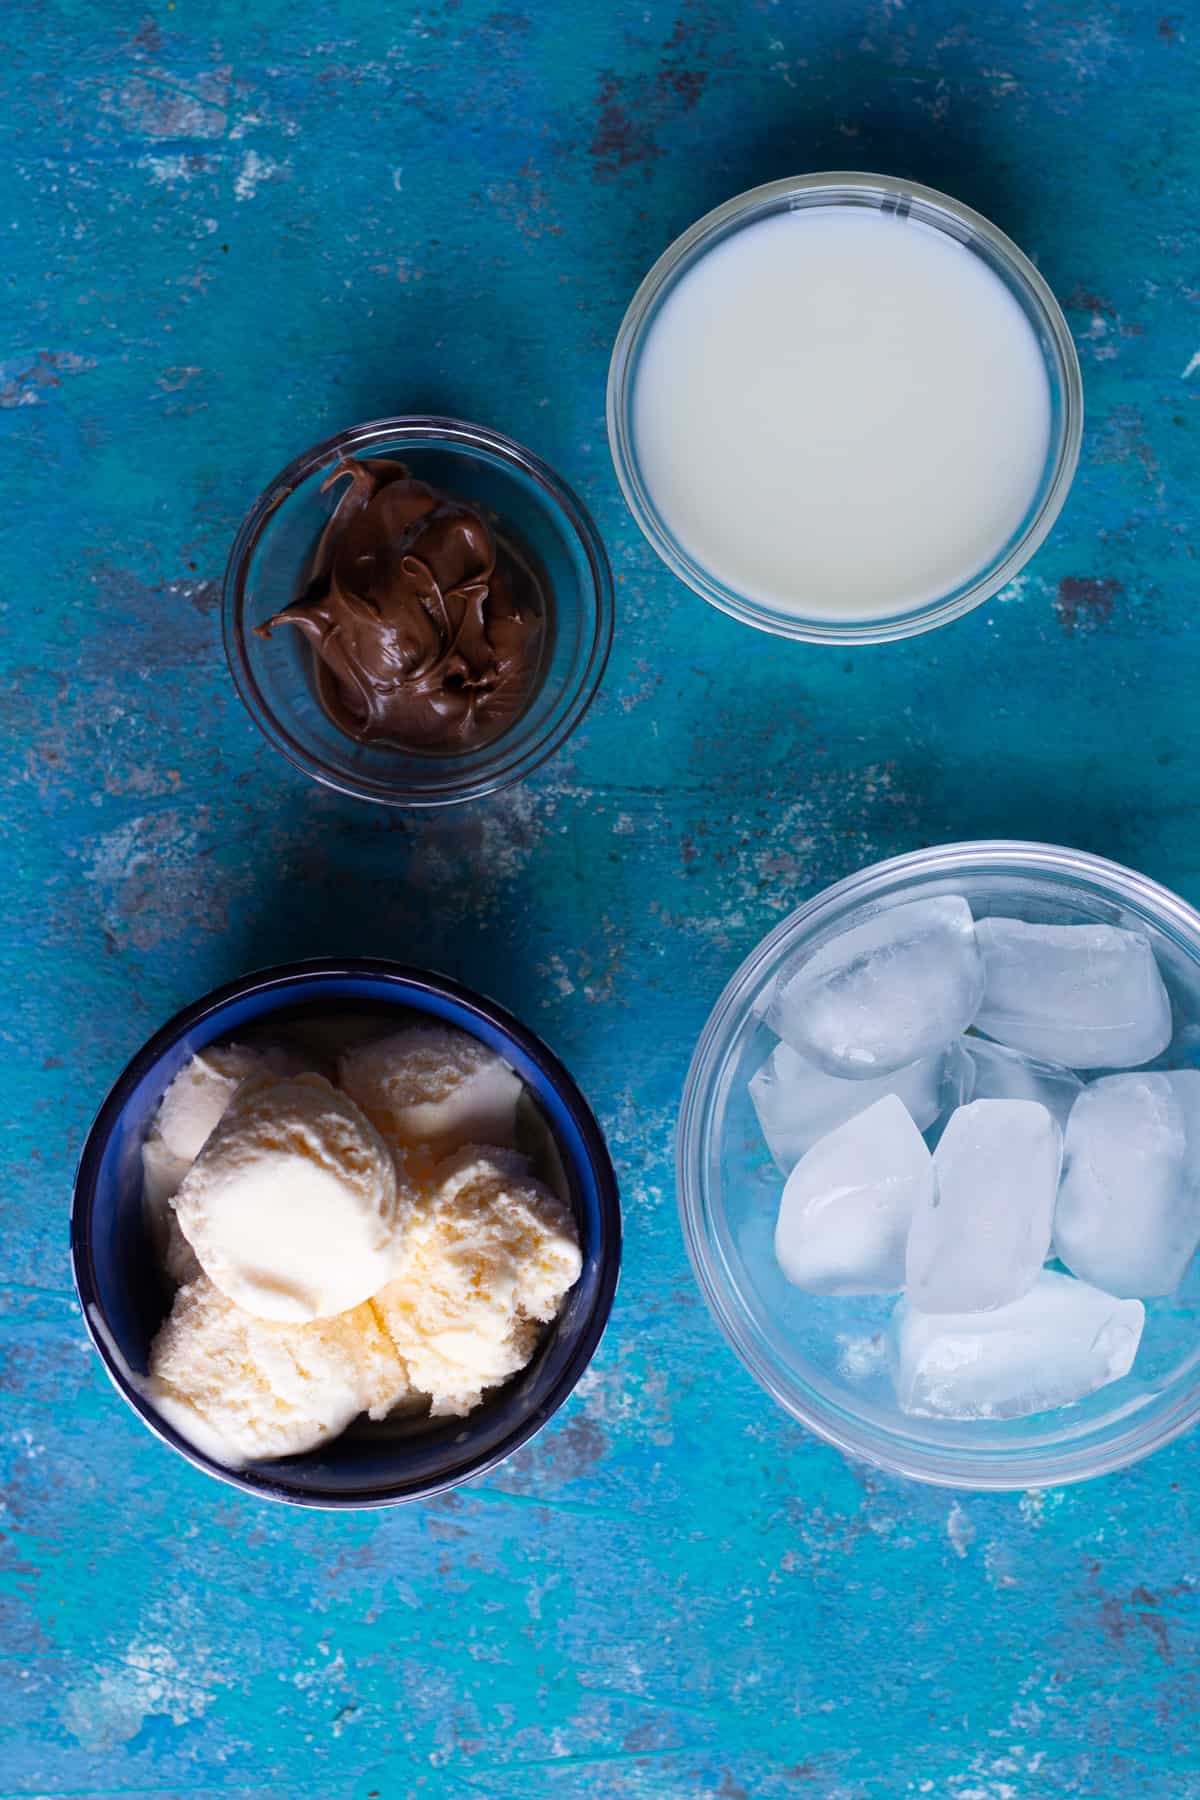 ingredients to make milkshake with nutella: nutella, milk, ice and ice cream